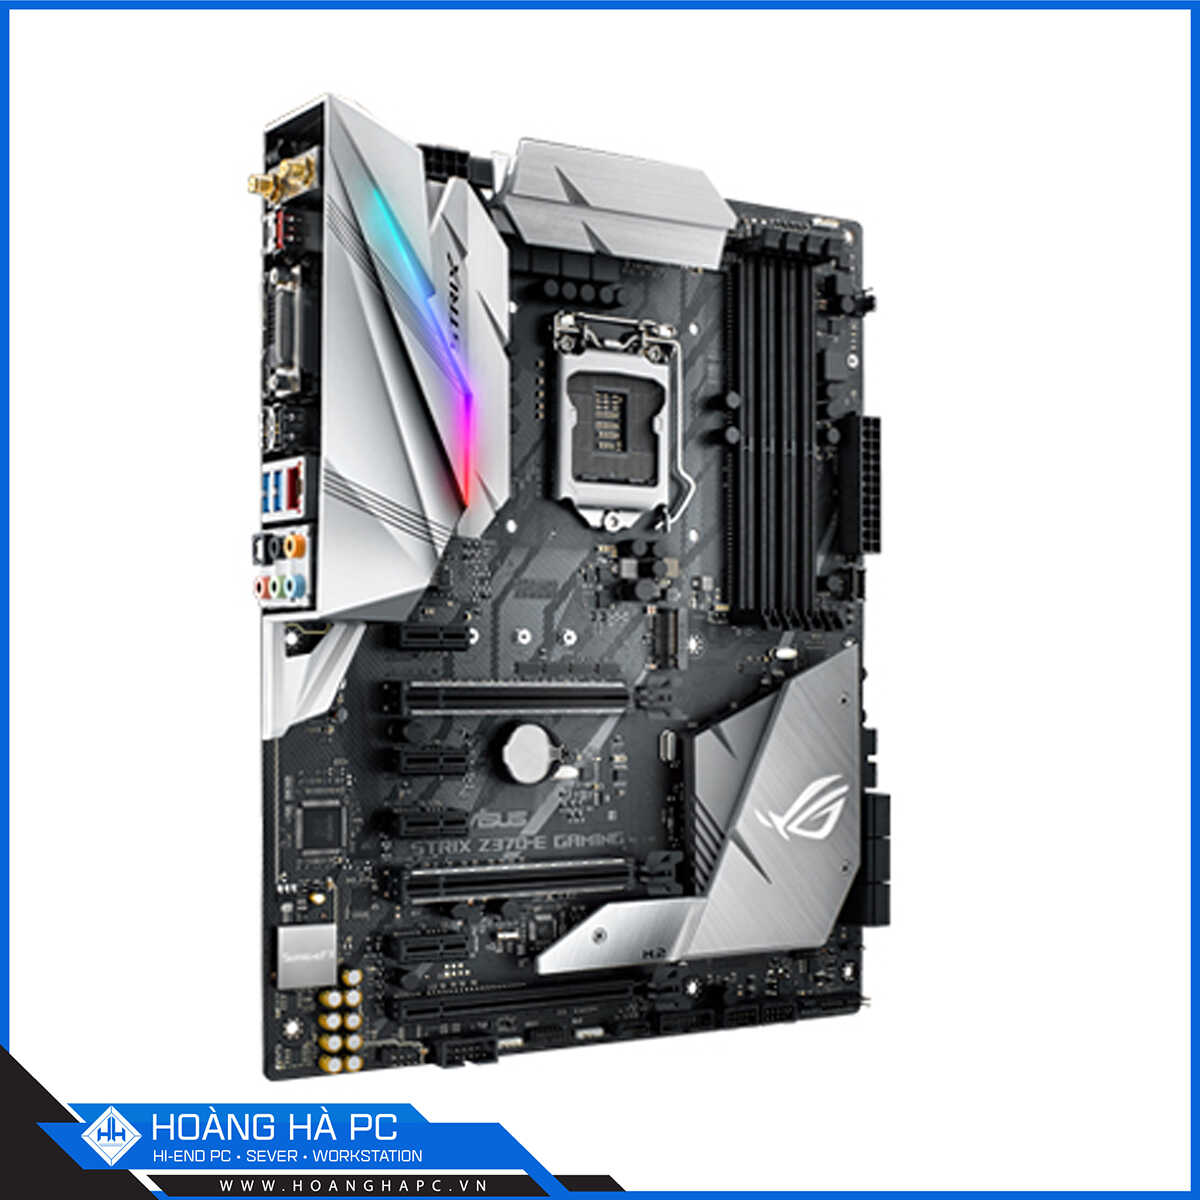 Mainboard Asus Rog Strix Z370-F Gaming  (Intel Z370, Socket LGA1151, ATX, 4 Khe Cắm Ram)